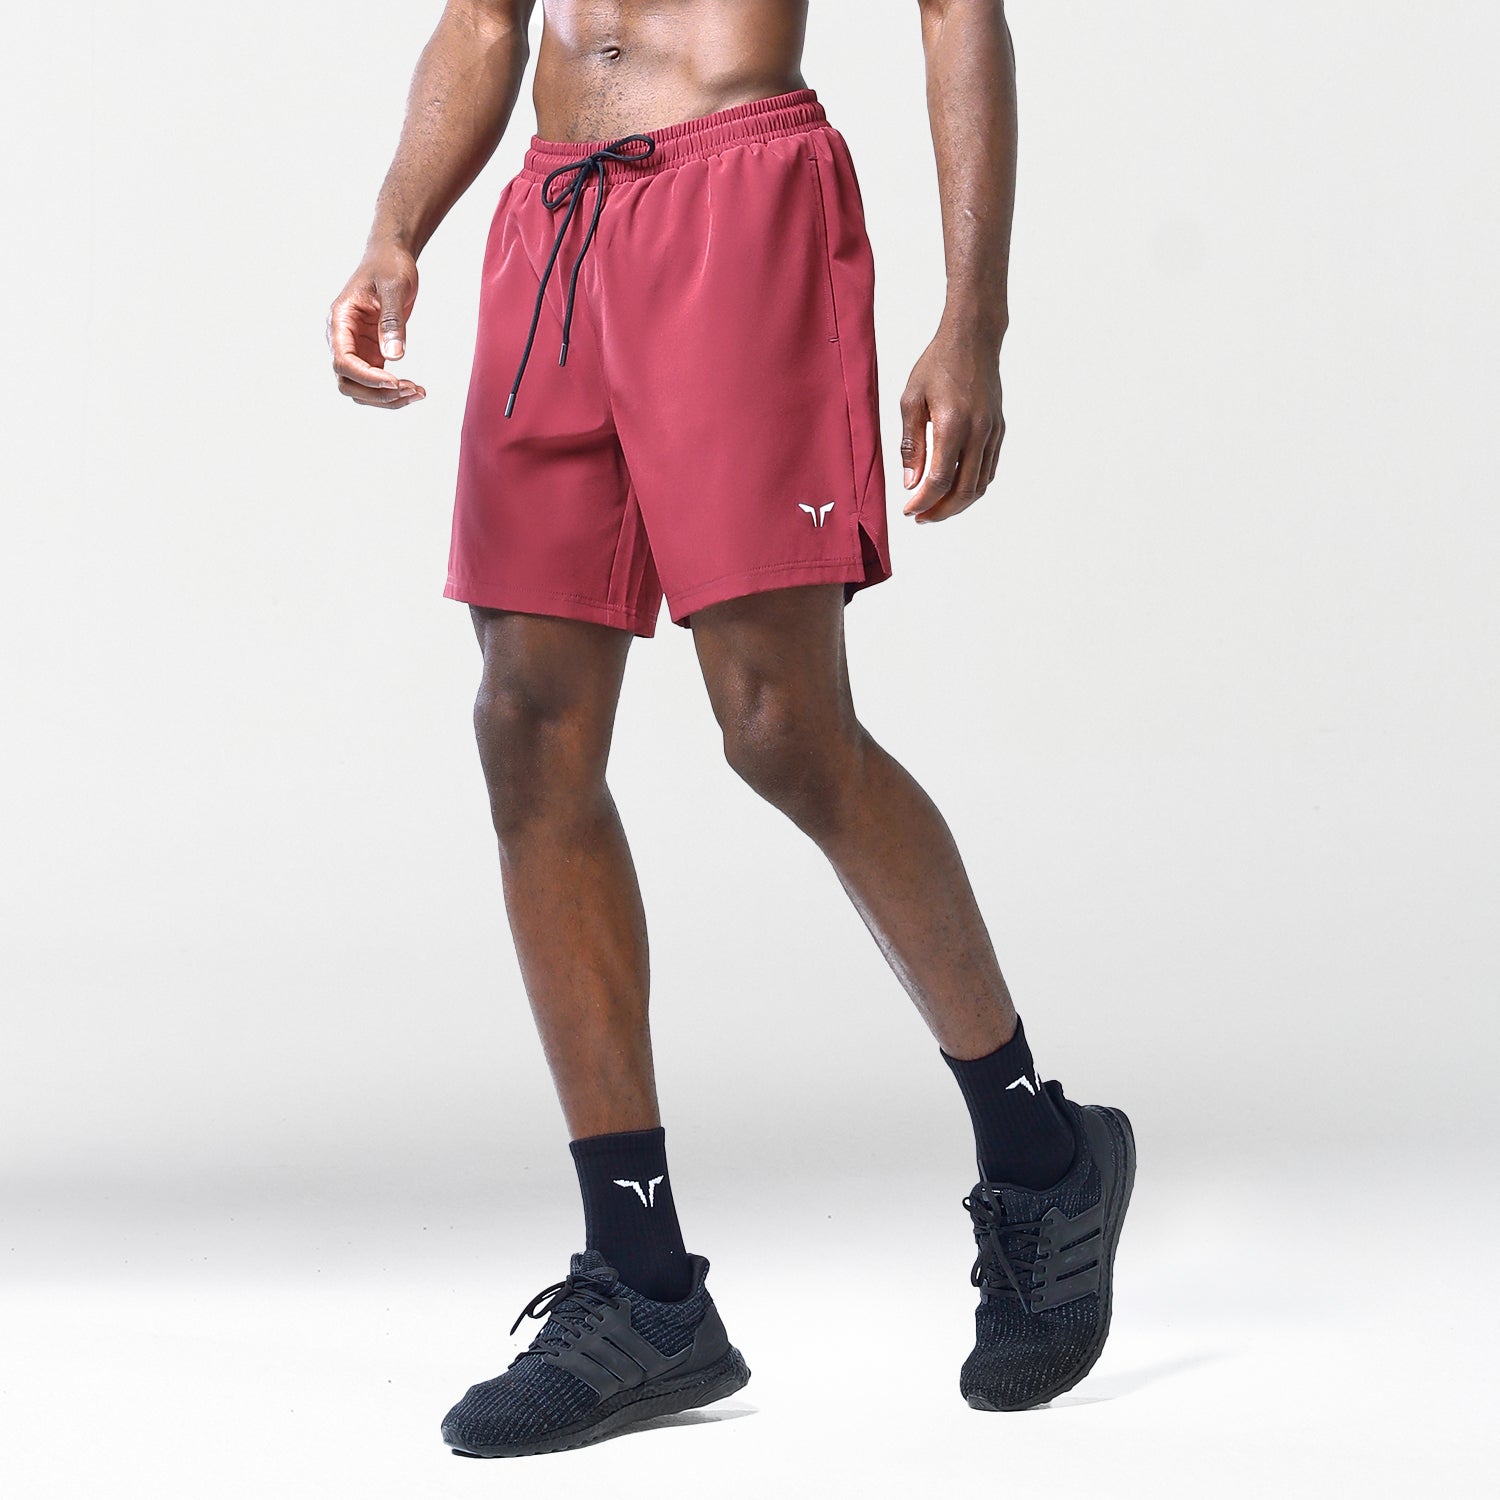 squatwolf-gym-wear-essential-gym-7-inch-shorts-black-workout-short-for-men